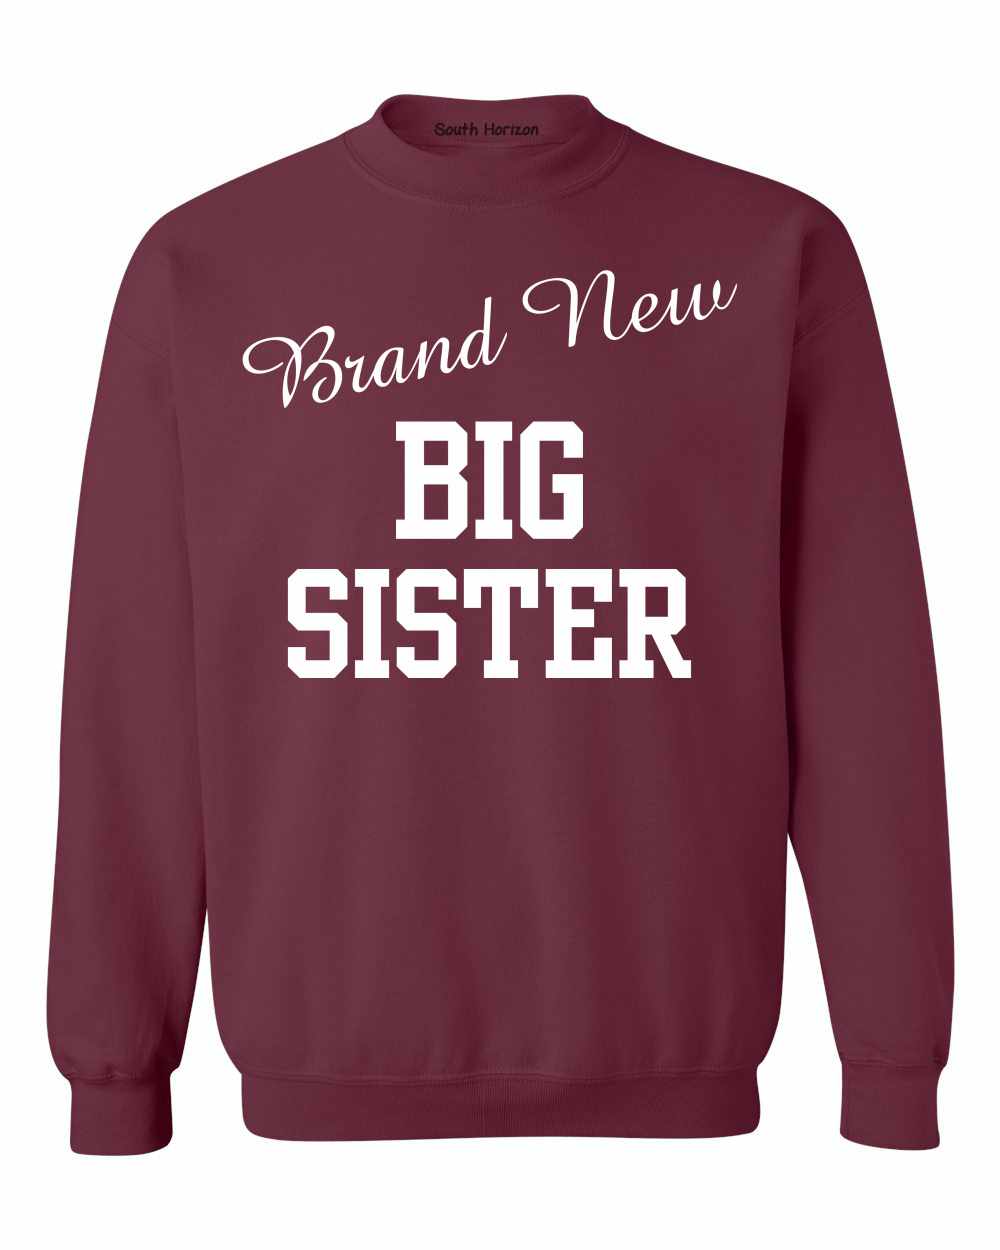 Brand New Big Sister on SweatShirt